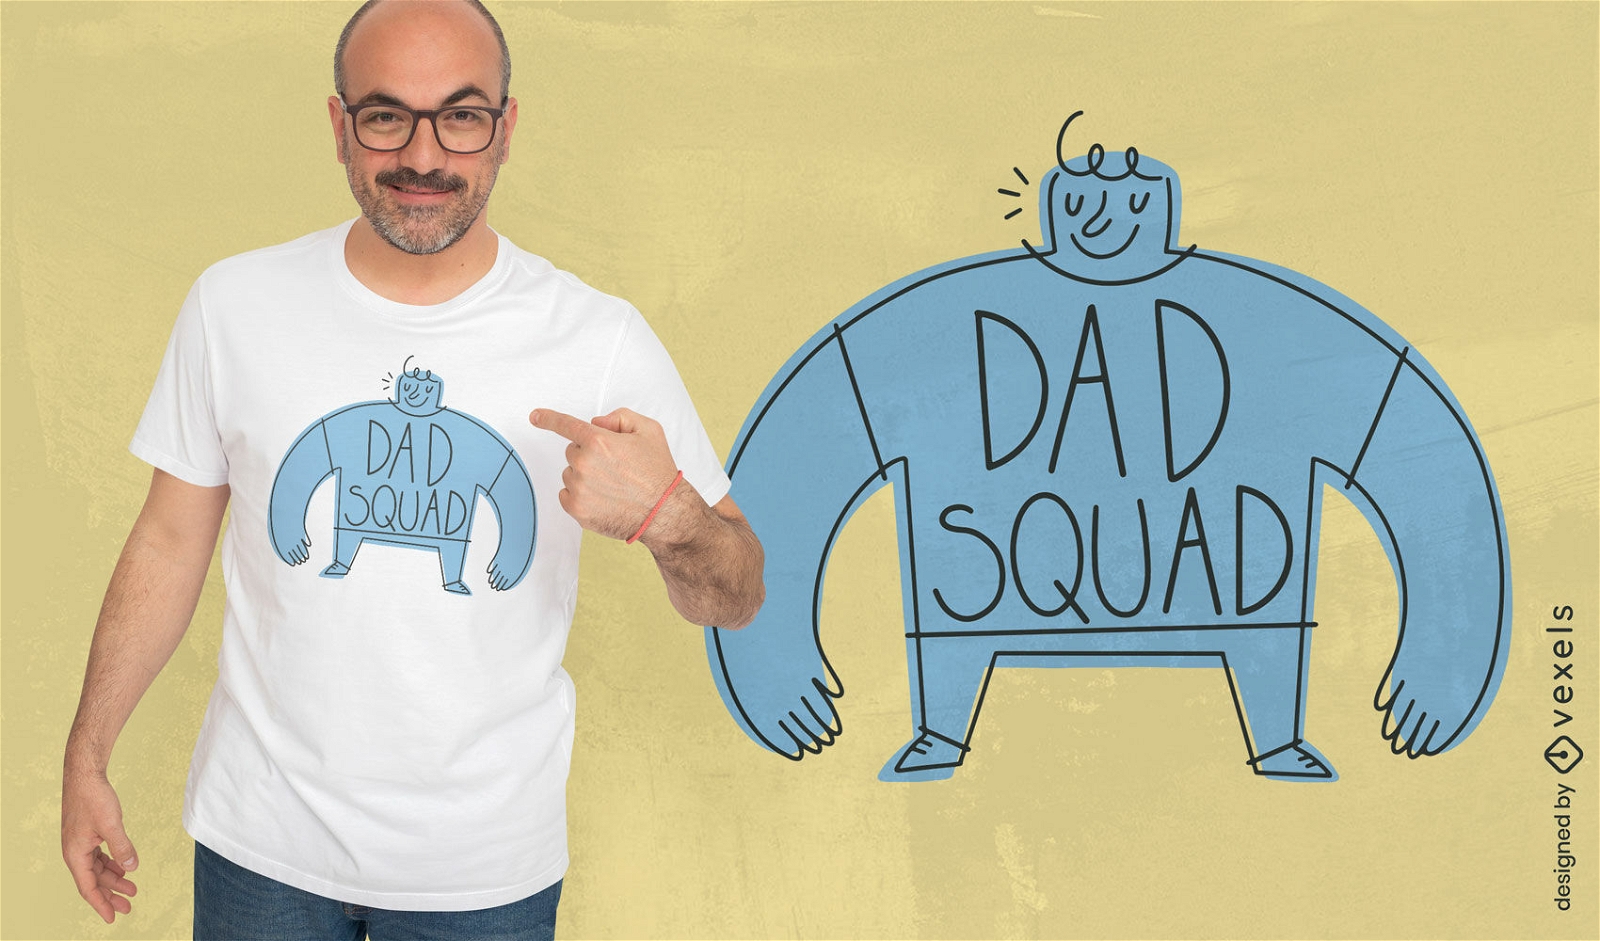 Dad squad character t-shirt design